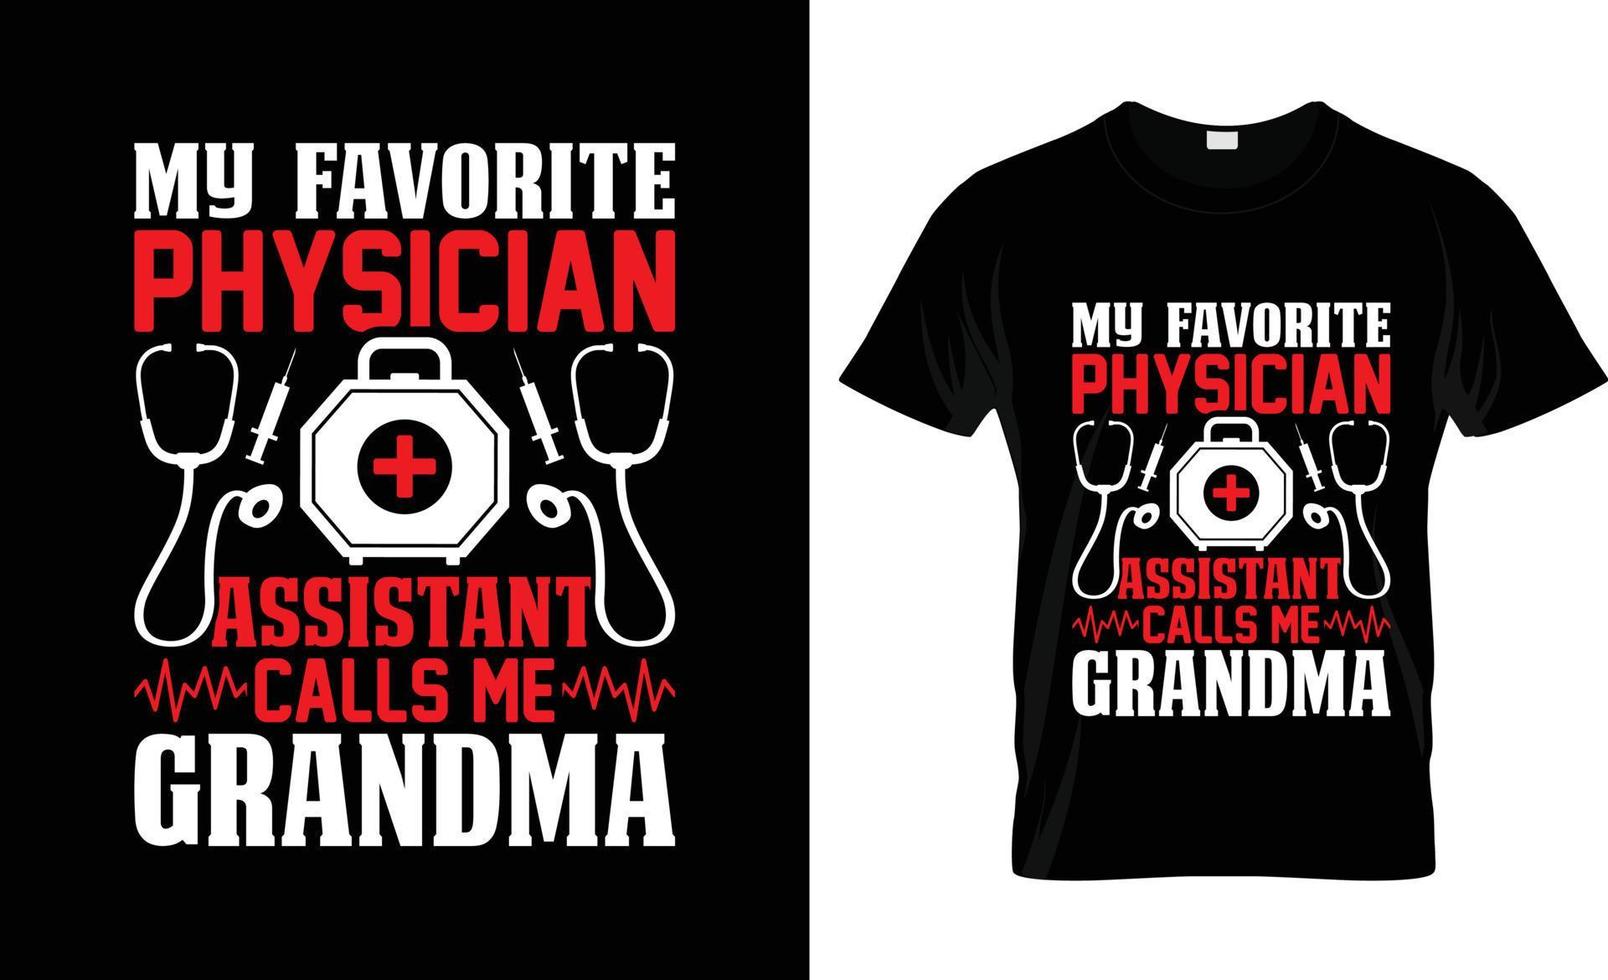 conception de t-shirt de médecin, slogan de t-shirt de médecin et conception de vêtements, typographie de médecin, vecteur de médecin, illustration de médecin